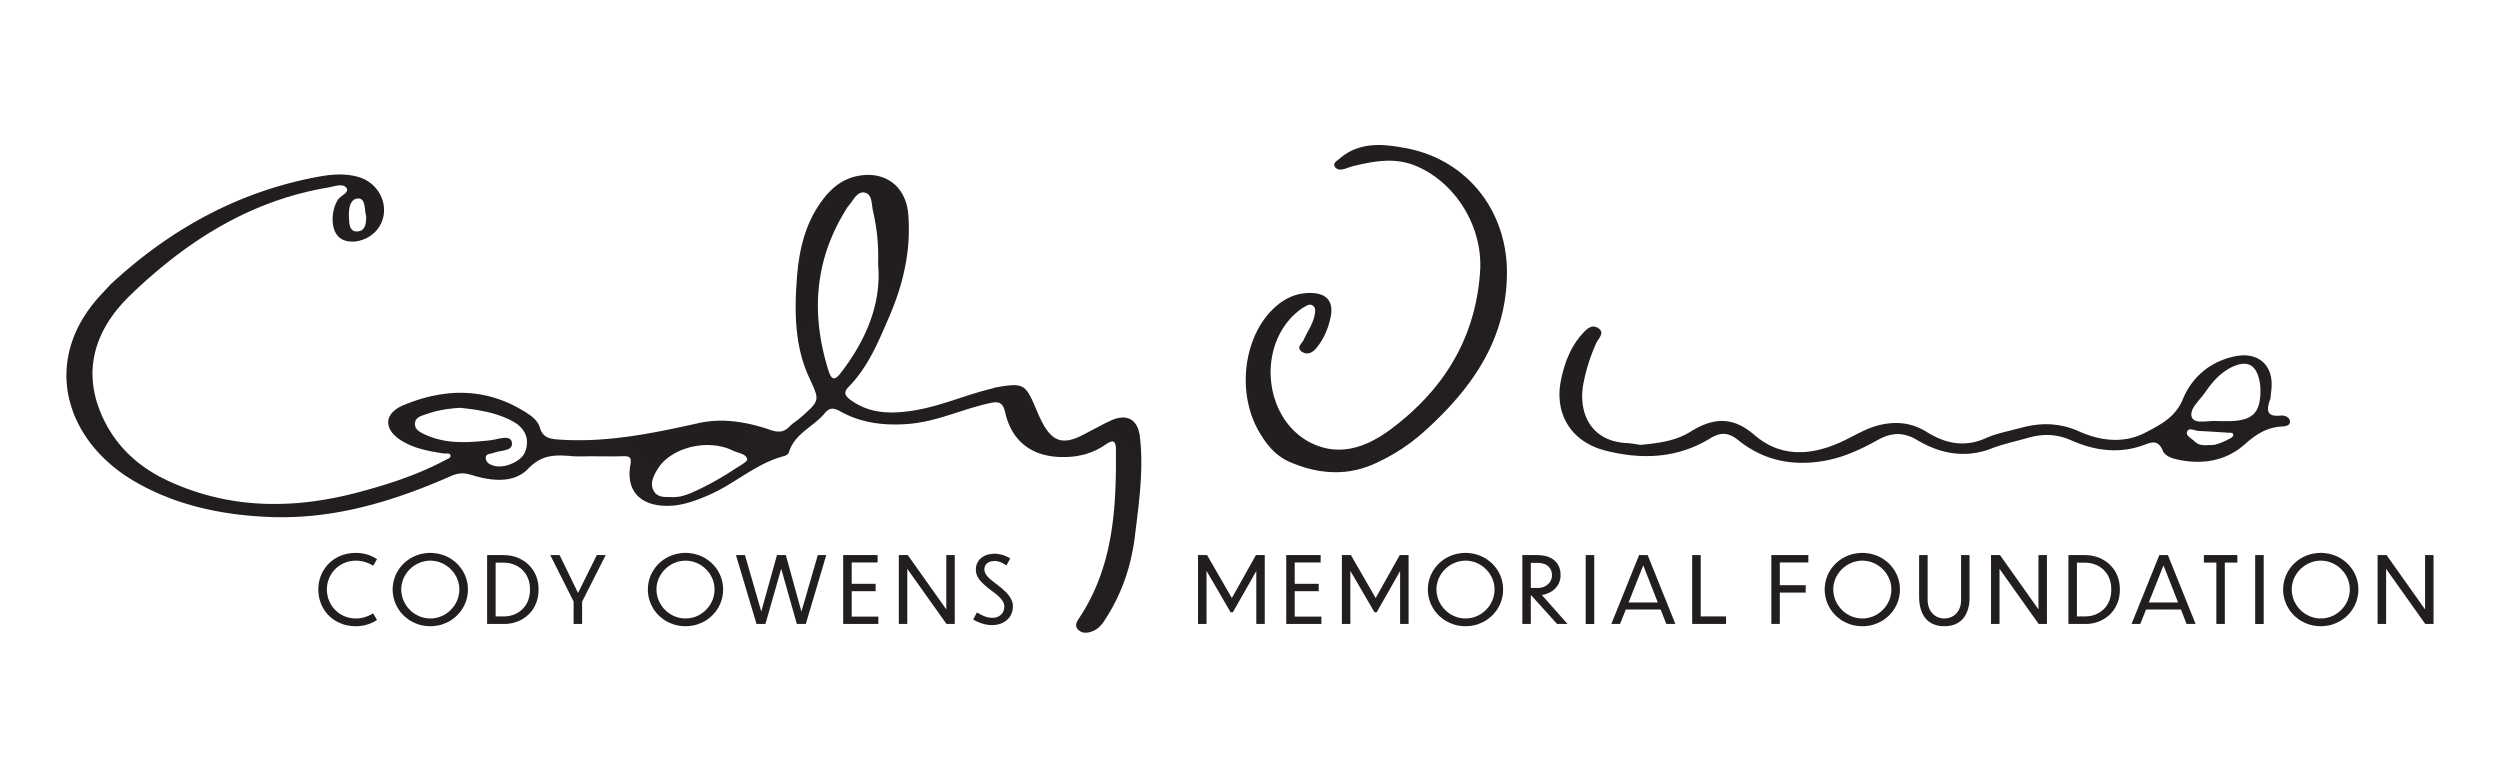 2A.Cody Owens Memorial Foundation (Premier)